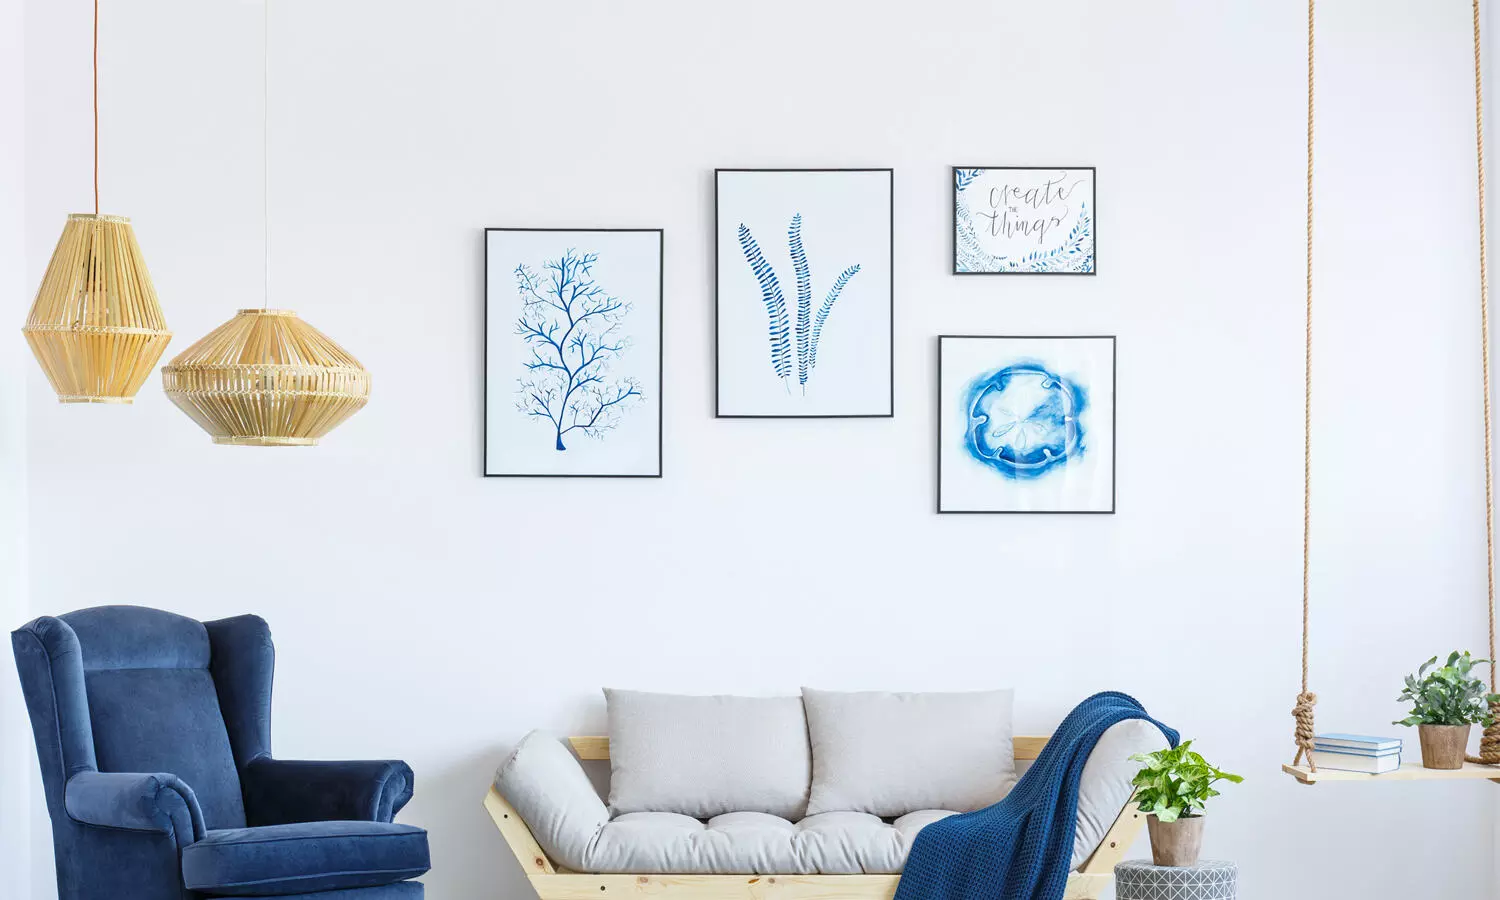 10 Trending Living Room Wall Decor Ideas 2021